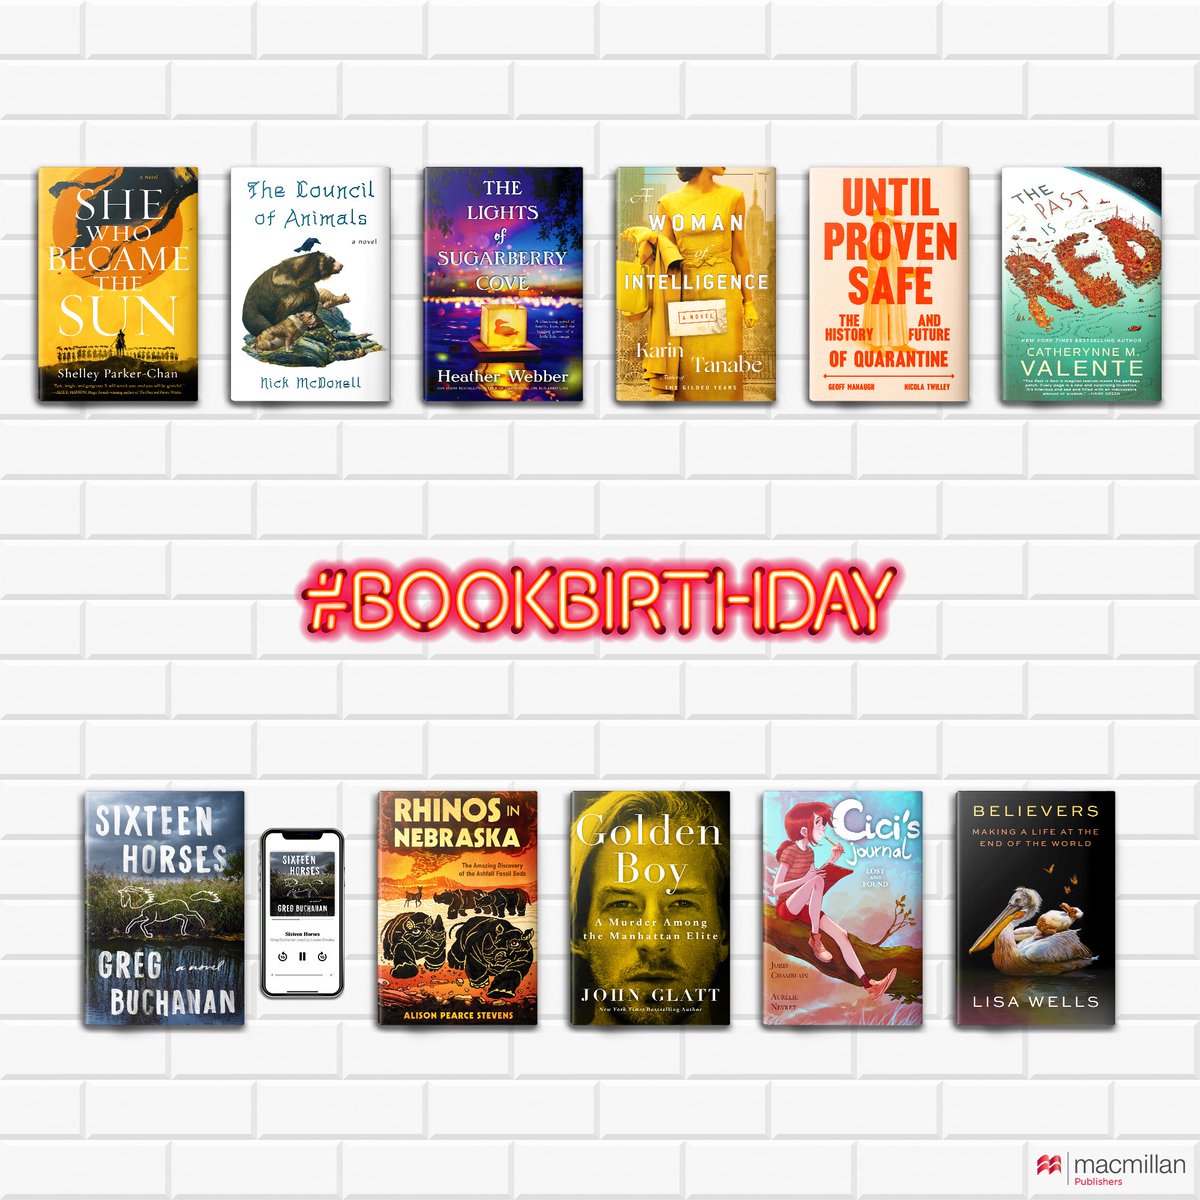 Happy #bookbirthday, @shelleypchan, Nick McDonell, @BooksbyHeather, @karintanabe, @geoffmanaugh + @nicolatwilley, @catvalente, @gregbuchanan, @AlisonPStevens + @matty_huynh, @Hove99, Joris Chamblain + Aurélie Neyret, & Lisa Wells!! 📕🎂🎉 #MacmillanPublishers #books